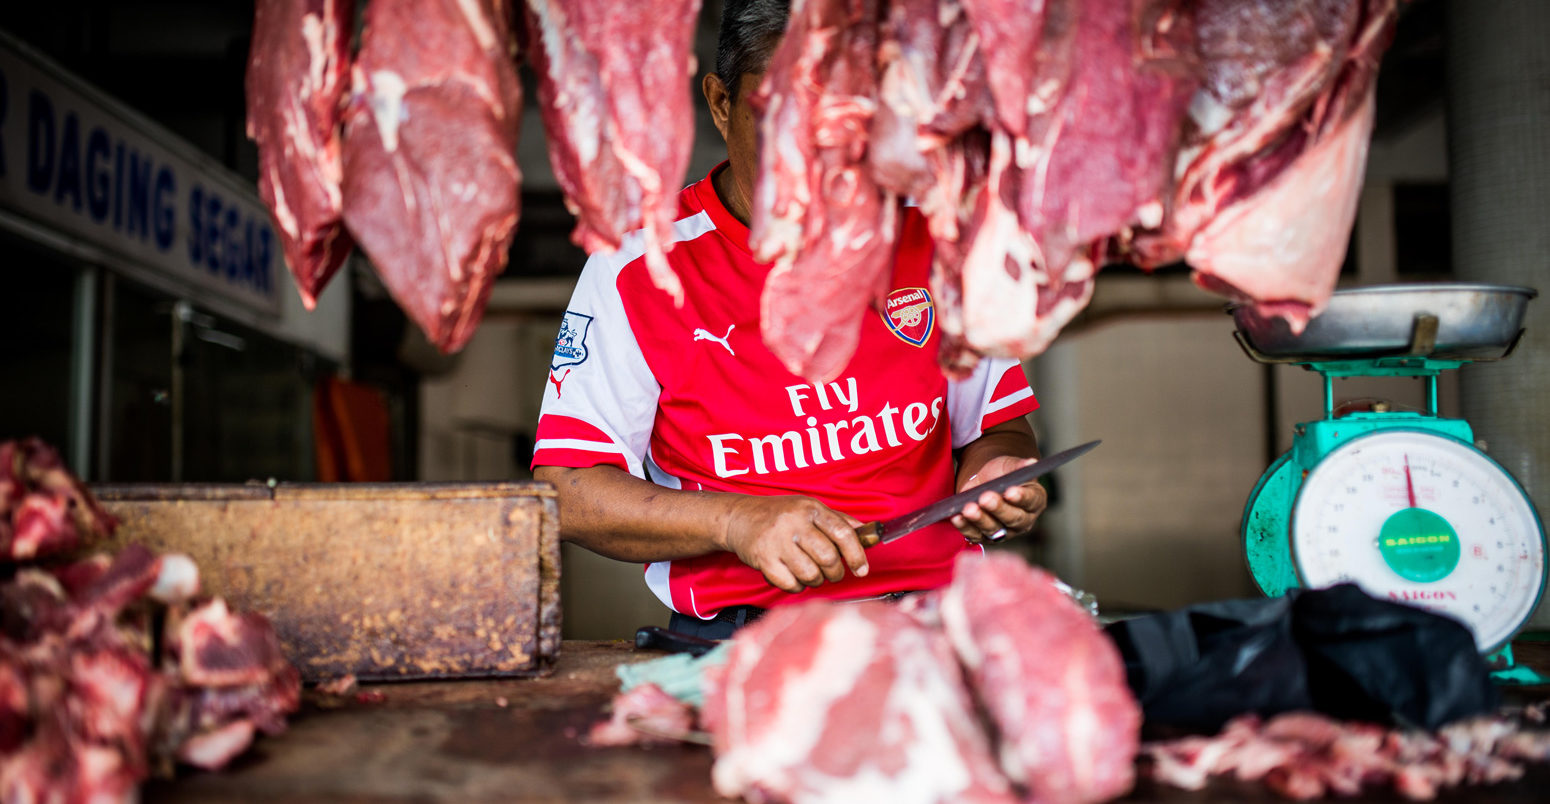 A butcher prepares cuts of meat in Kota Kinabalu, Malaysian Borneo.